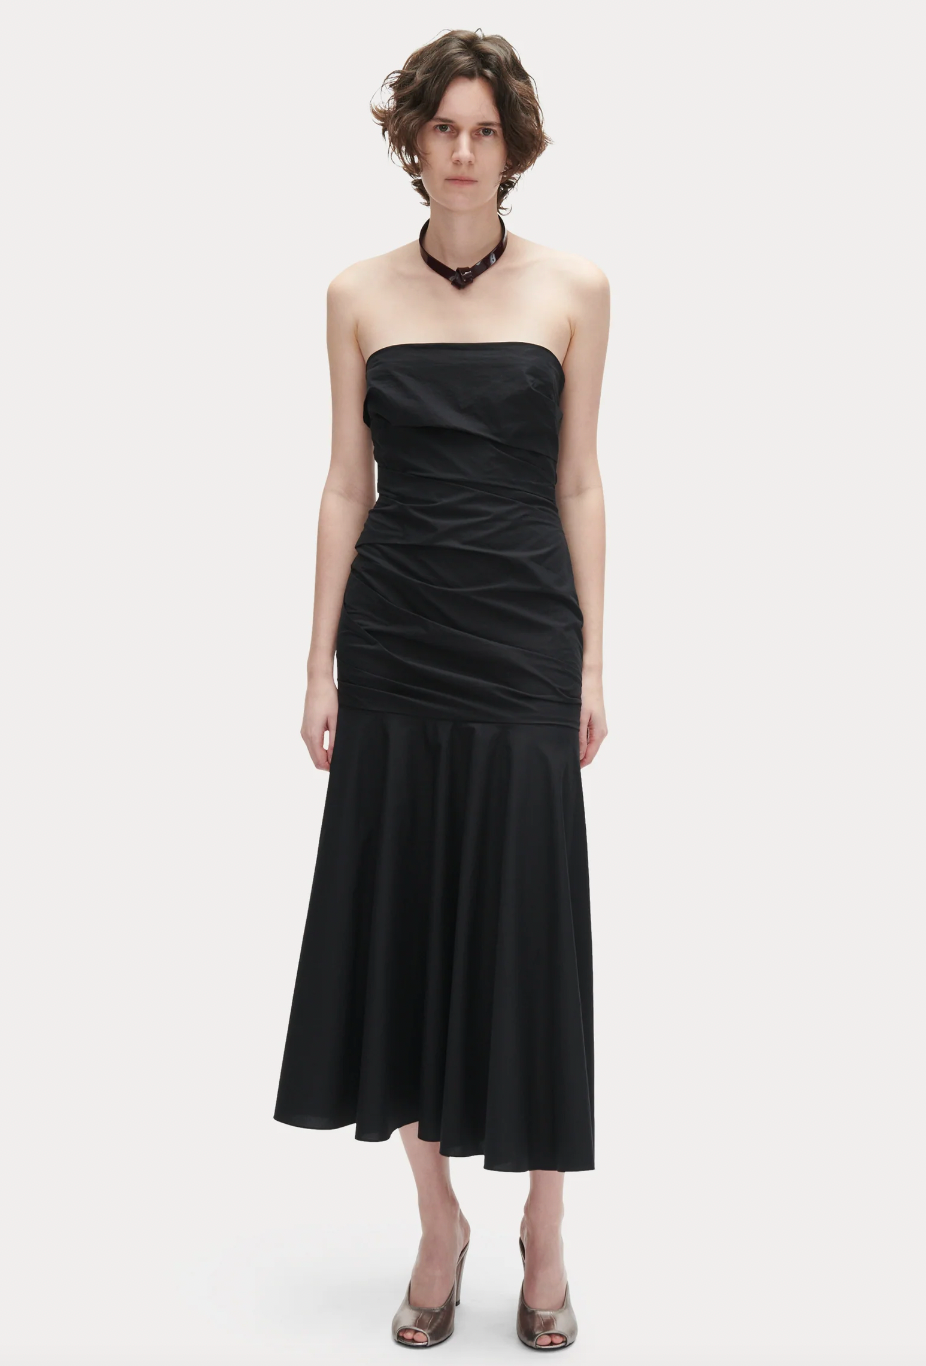 Product Image for Locanda Dress, Black